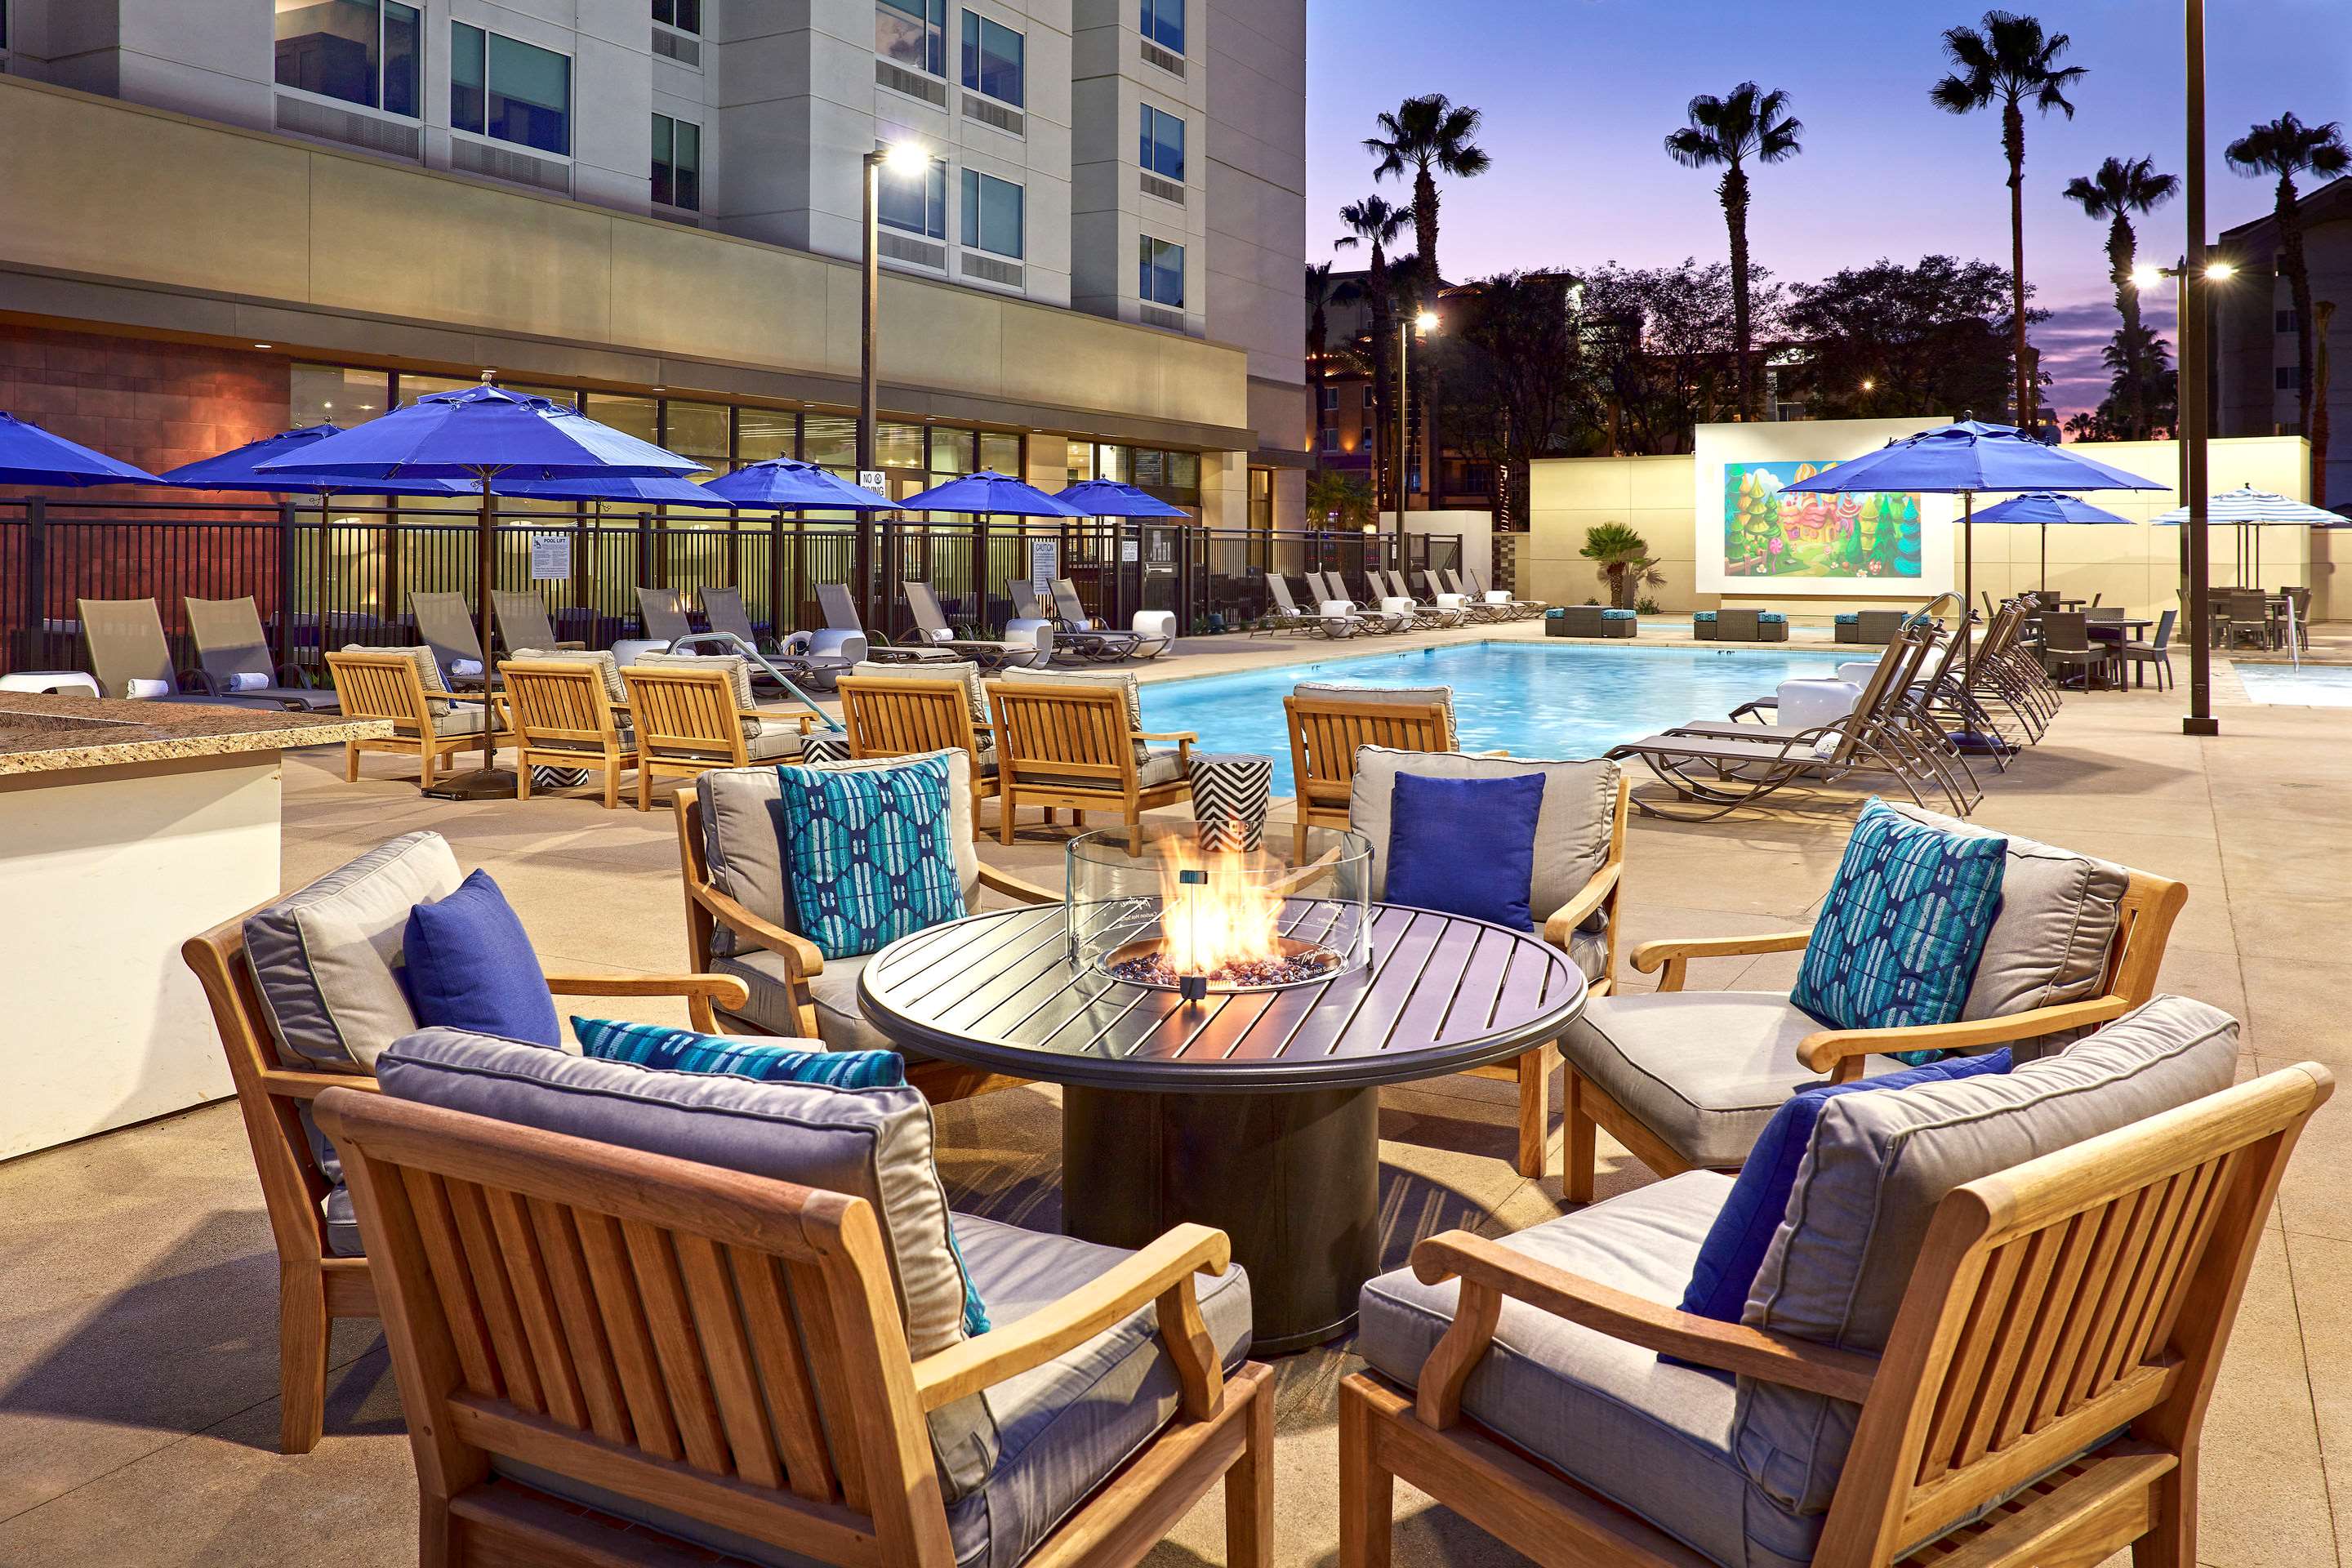 Cambria Hotel Anaheim Resort Area Photo